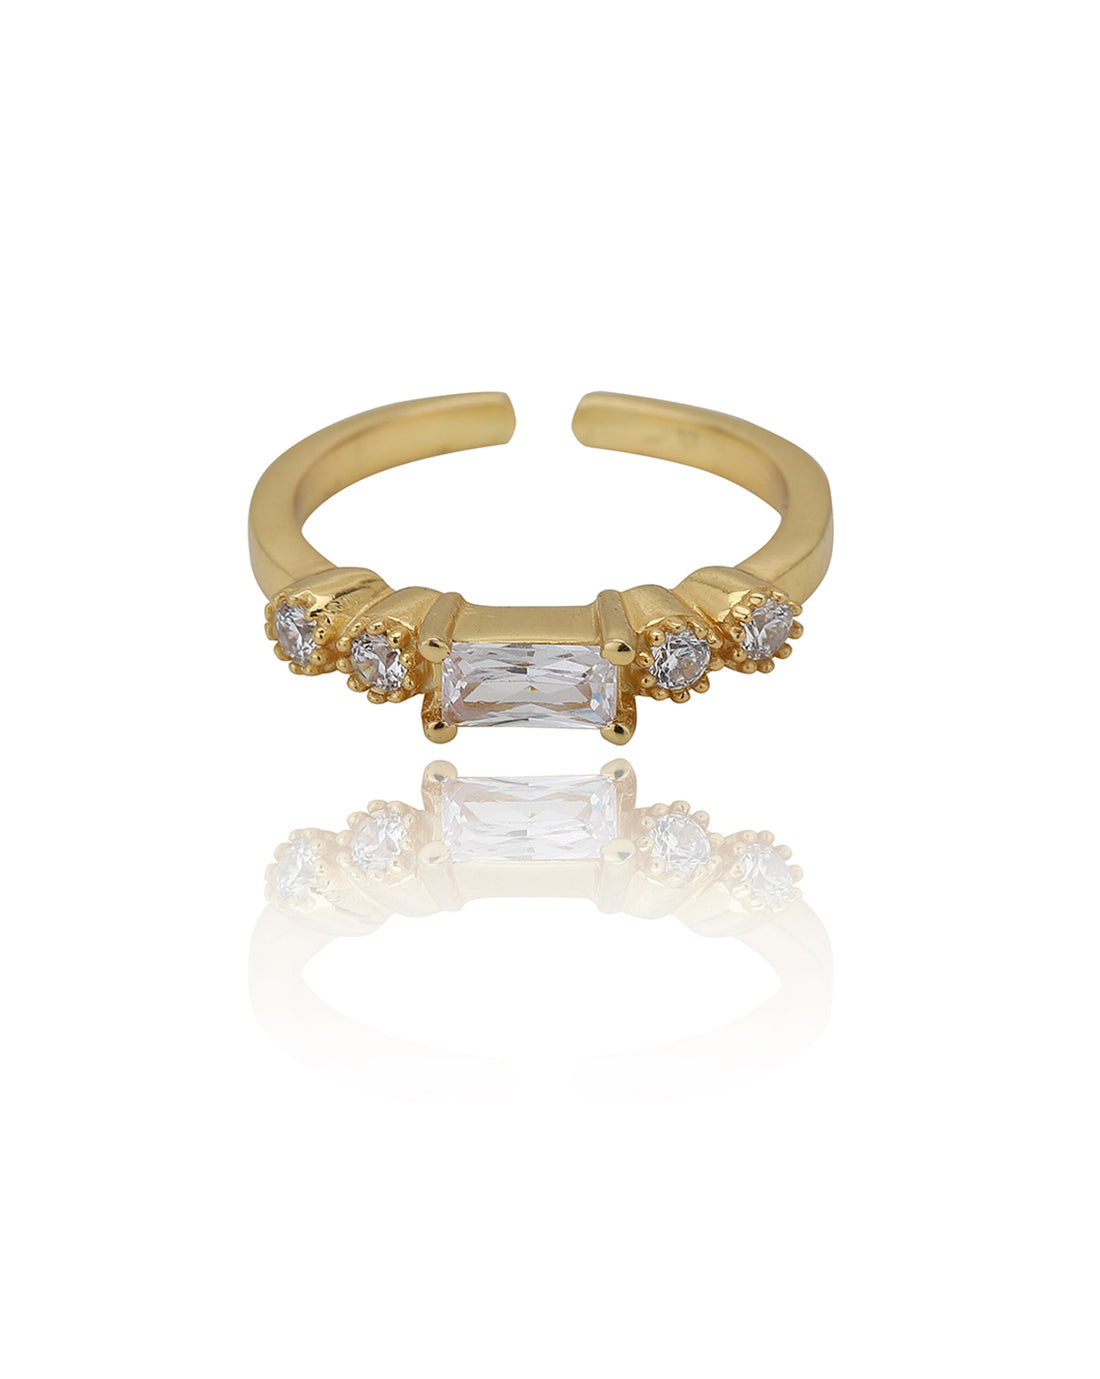 Carlton London Gold Plated Cz Studded Adjustable Finger Ring For Women